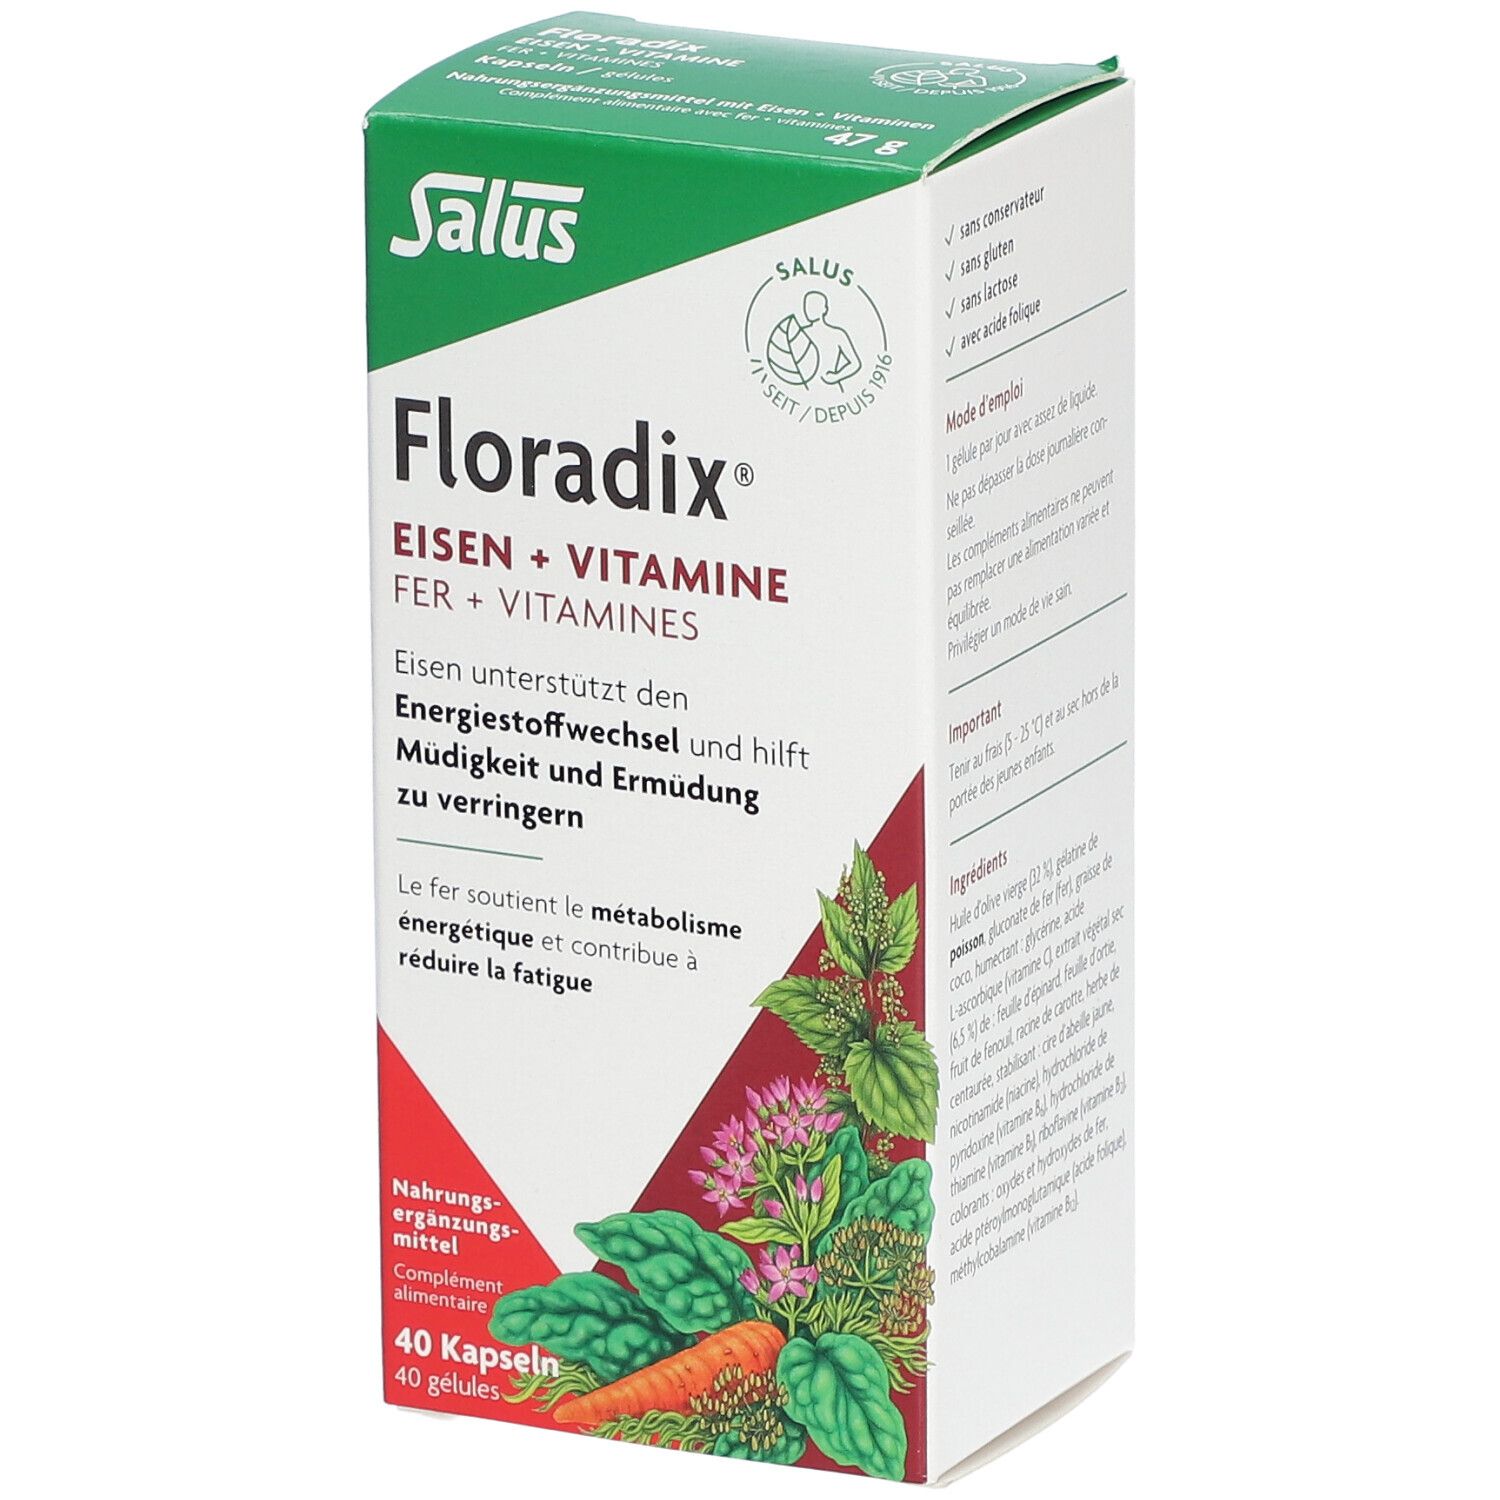 Image of Floradix® Eisen + Vitamine